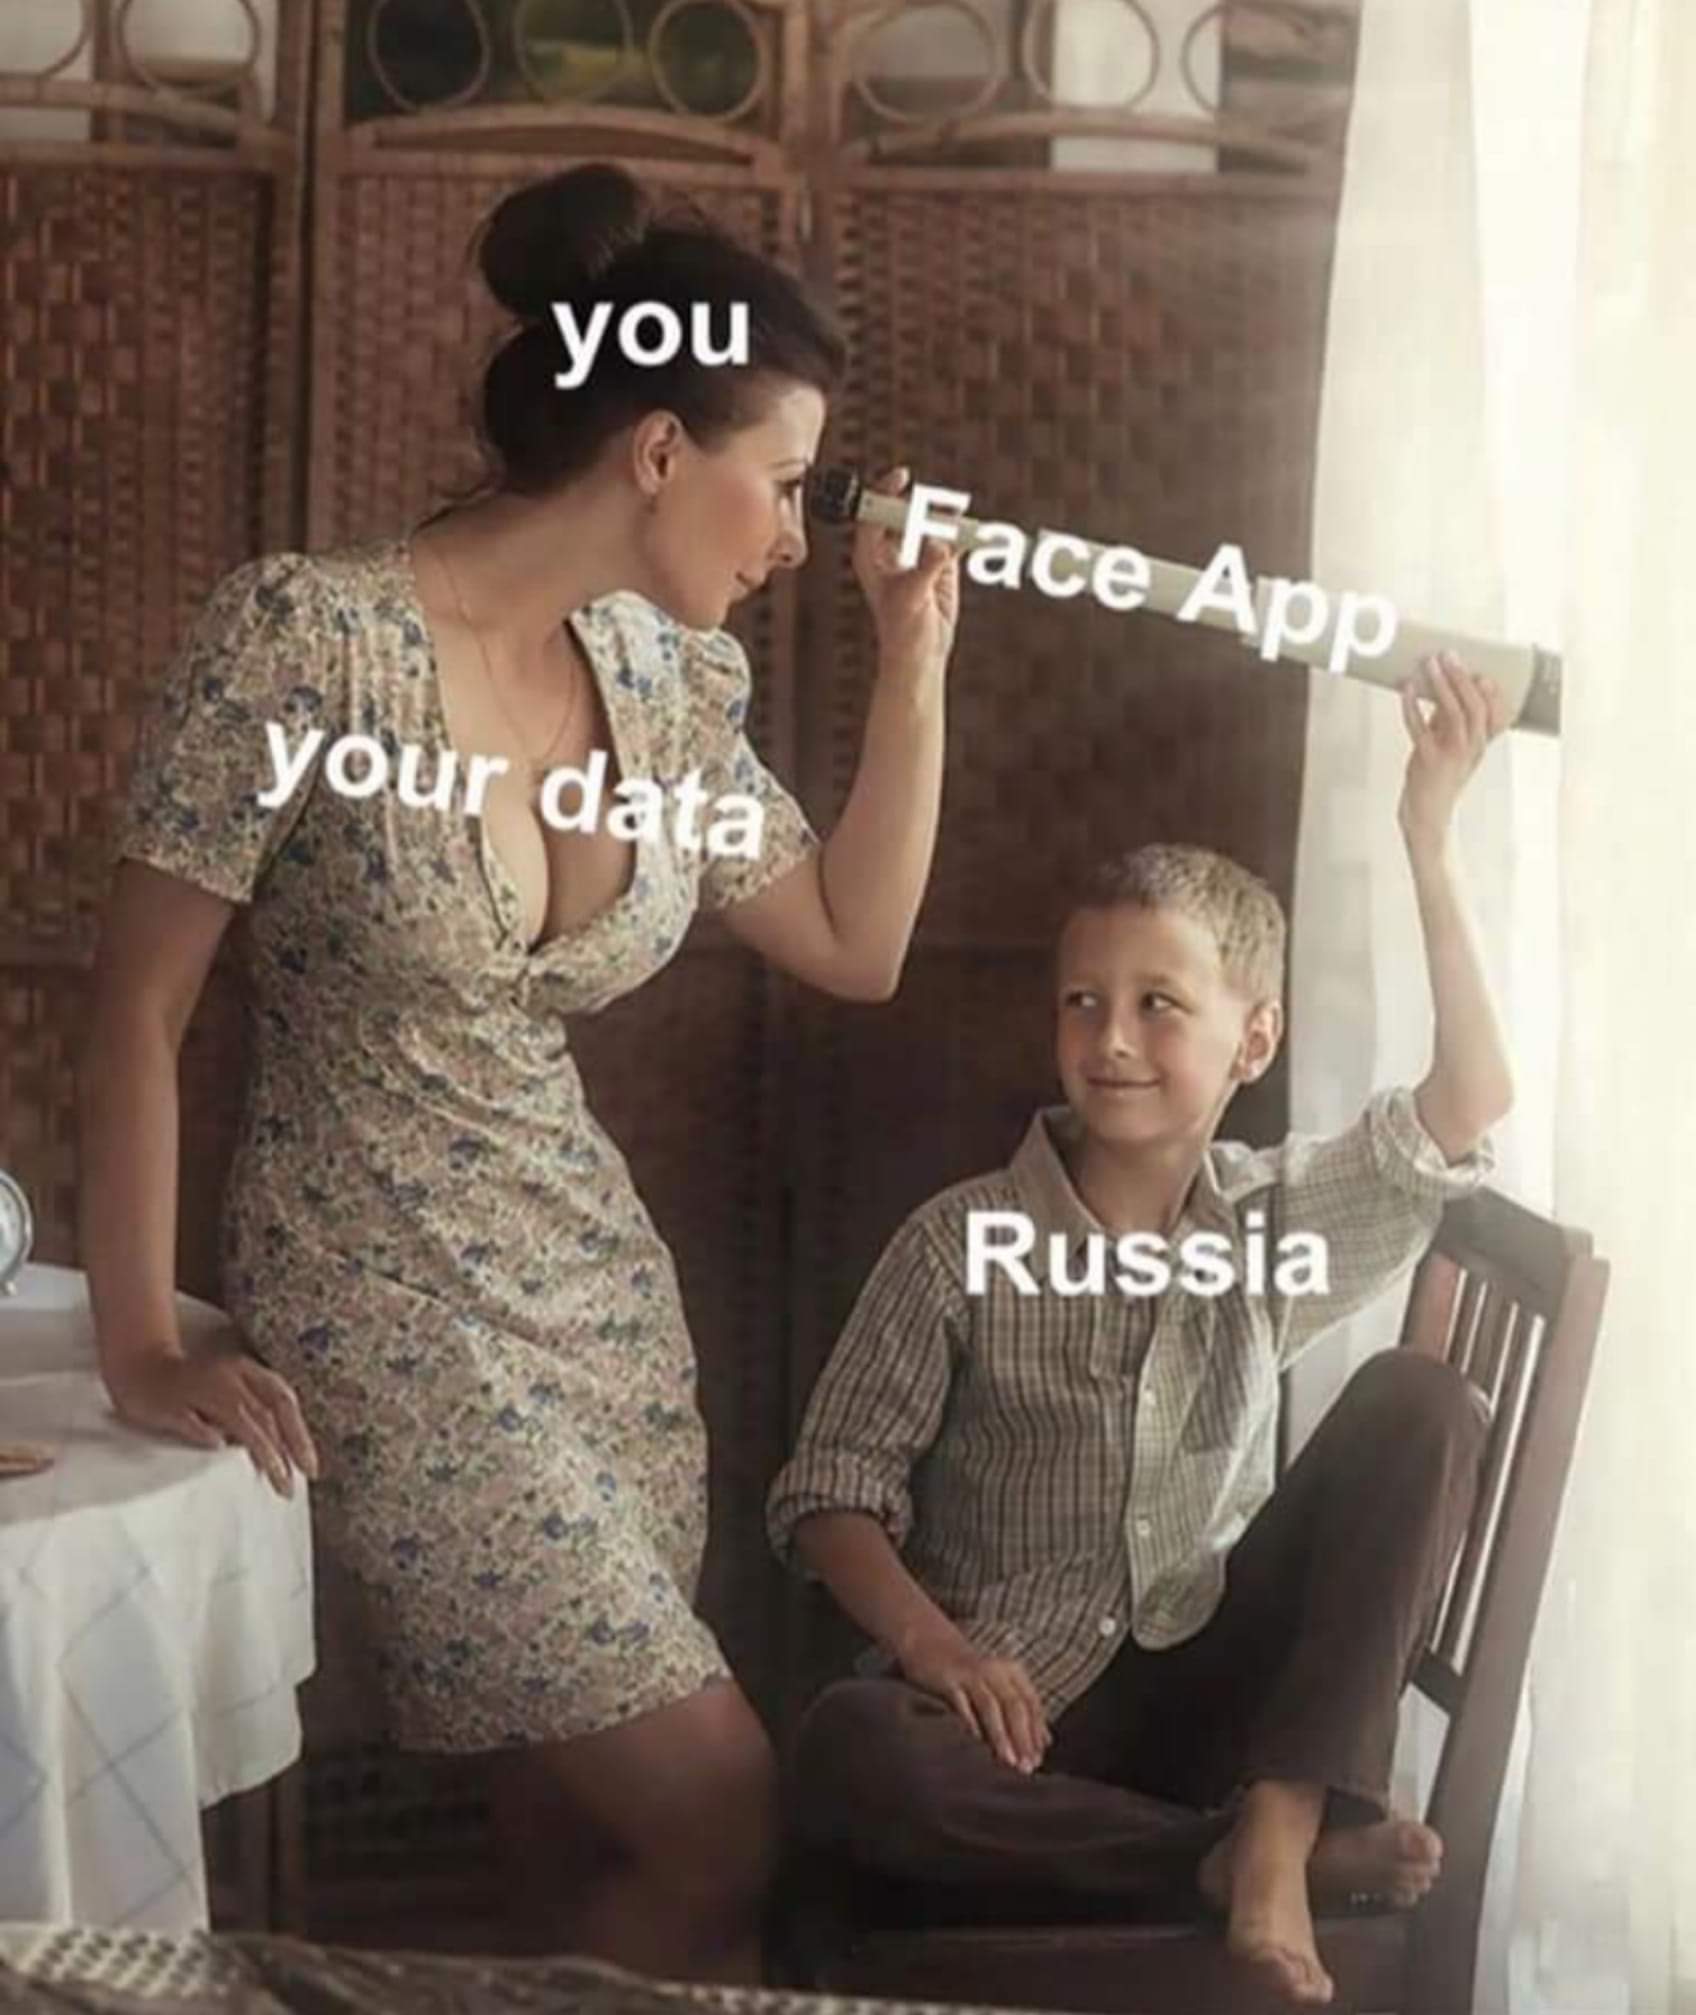 face app meme russia - you Face App your data Russia